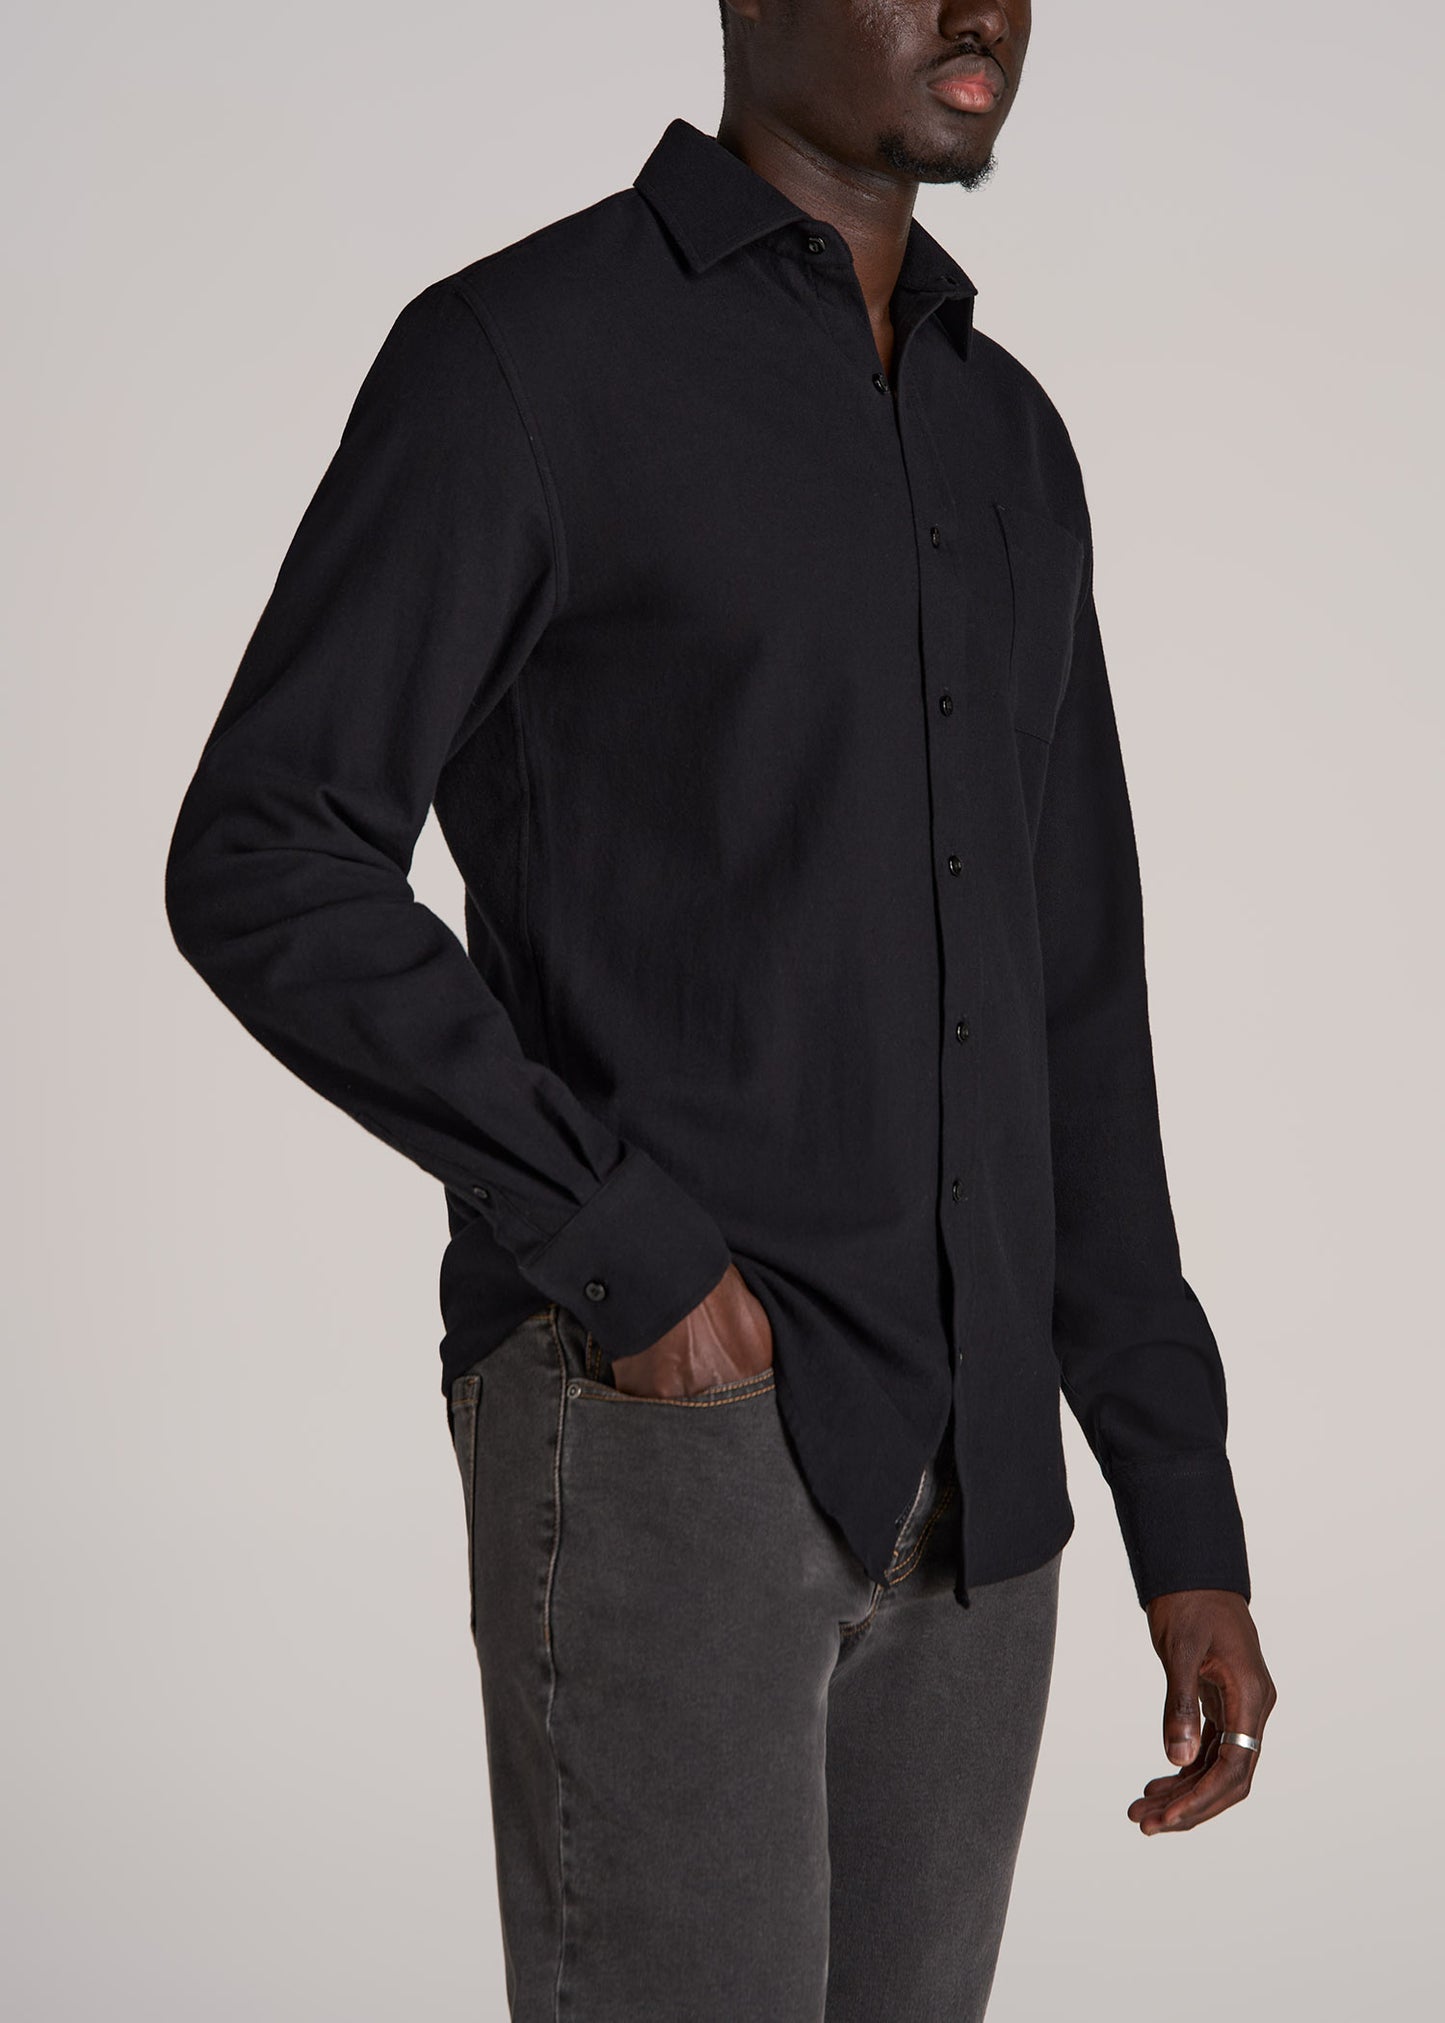 Nelson Flannel Shirt for Tall Men in Black